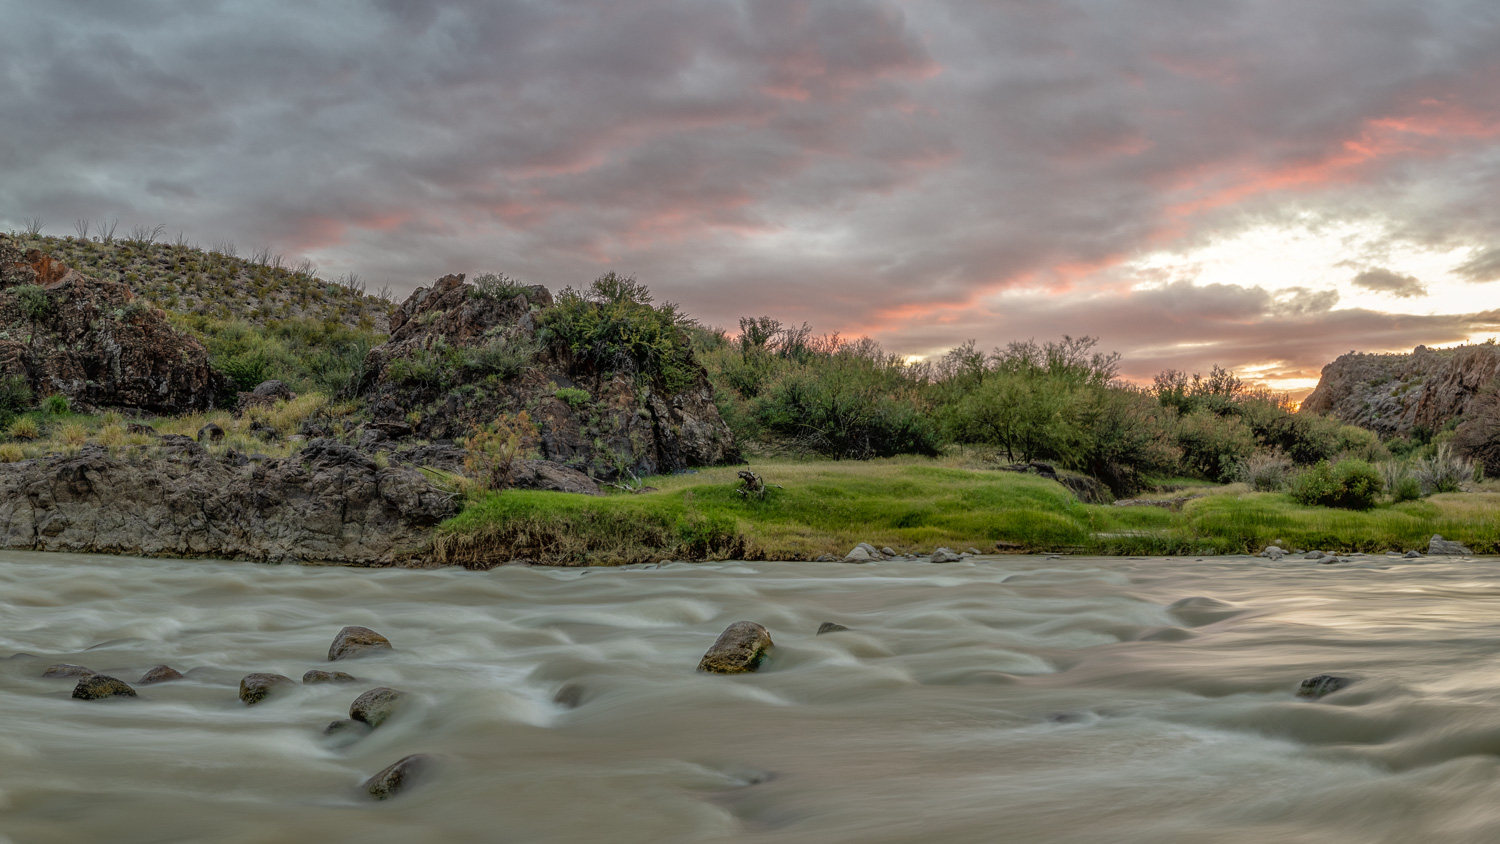 Sunset on the Rio Grande